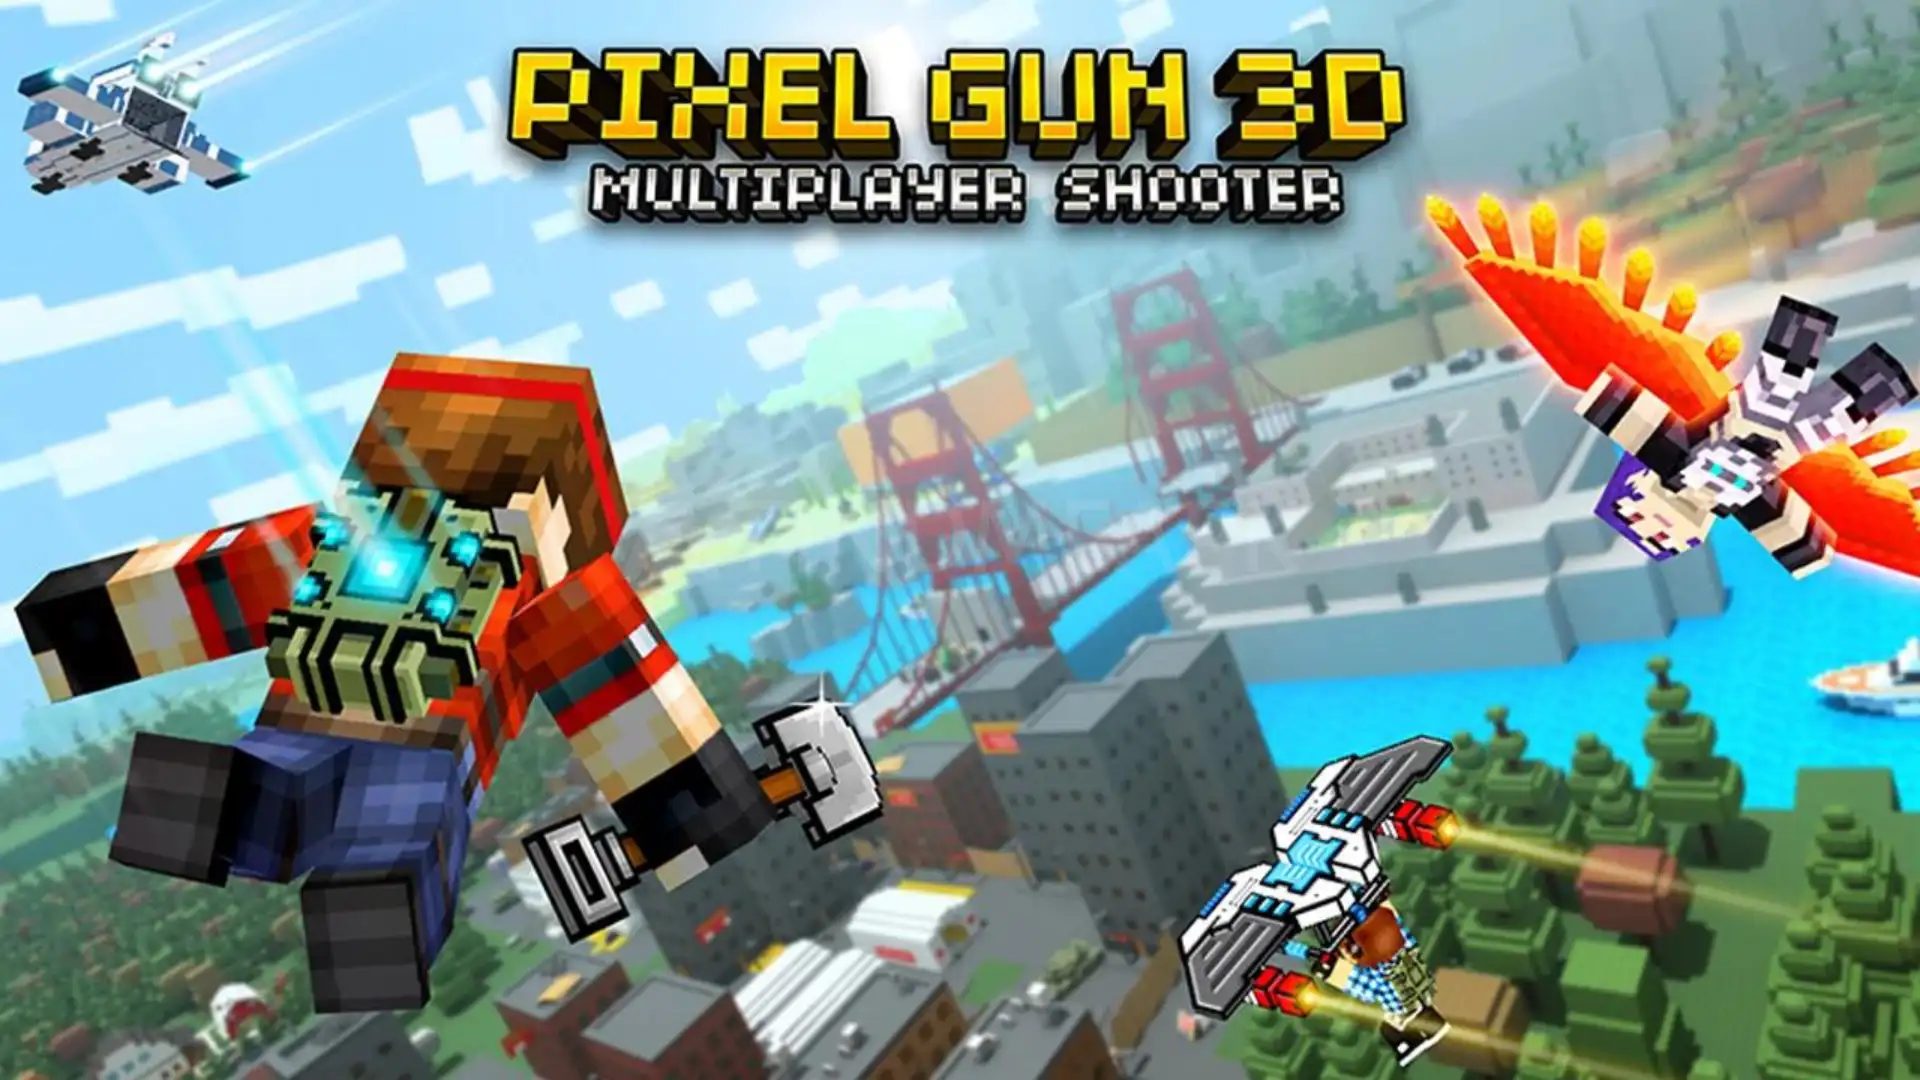 Gems & Coins Pixel Gun 3D APK Download - Free - 9Apps